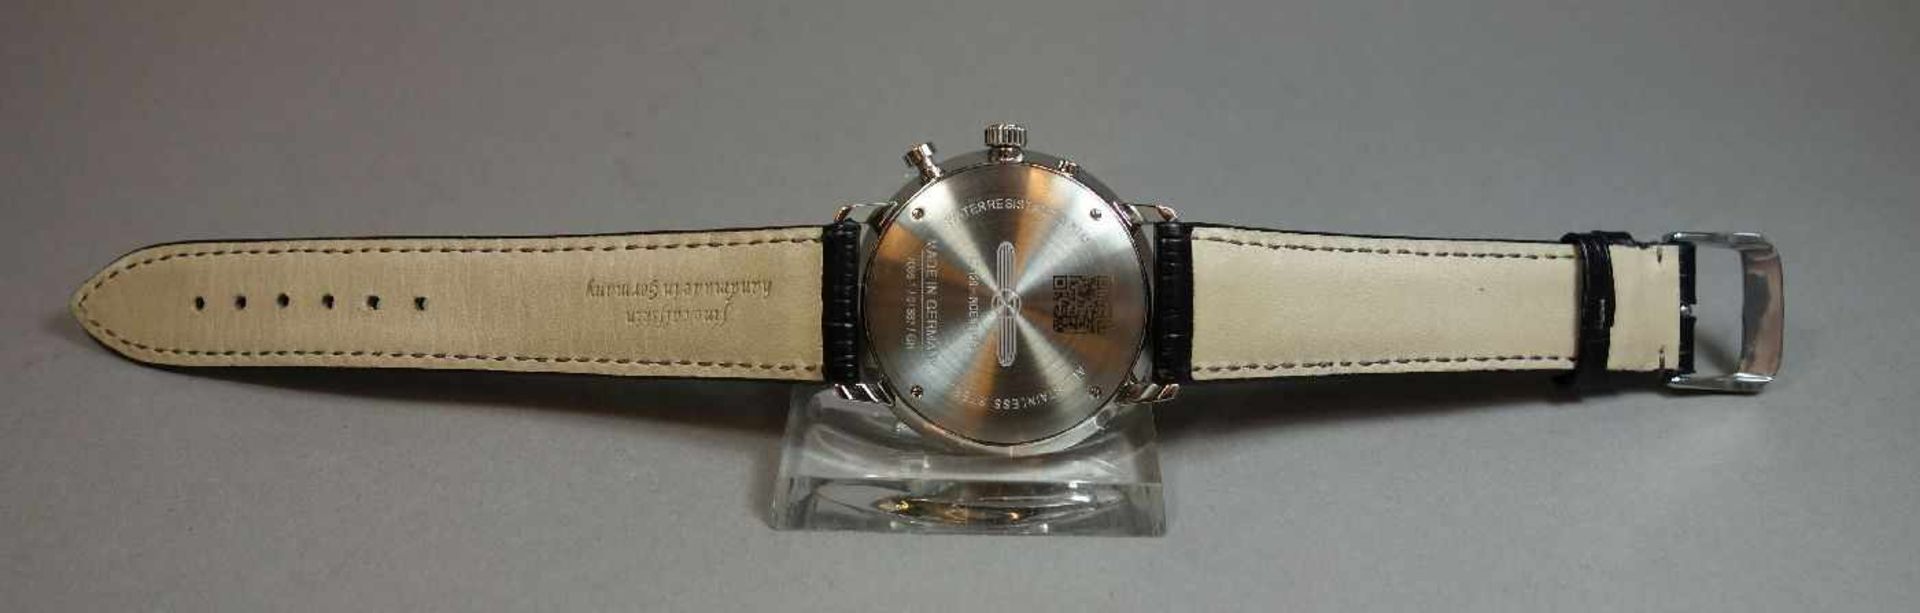 ZEPPELIN - ARMBANDUHR / CHRONOGRAPH / wristwatch, Quartz-Uhr, Manufaktur Point tec Electronic GmbH / - Image 7 of 8